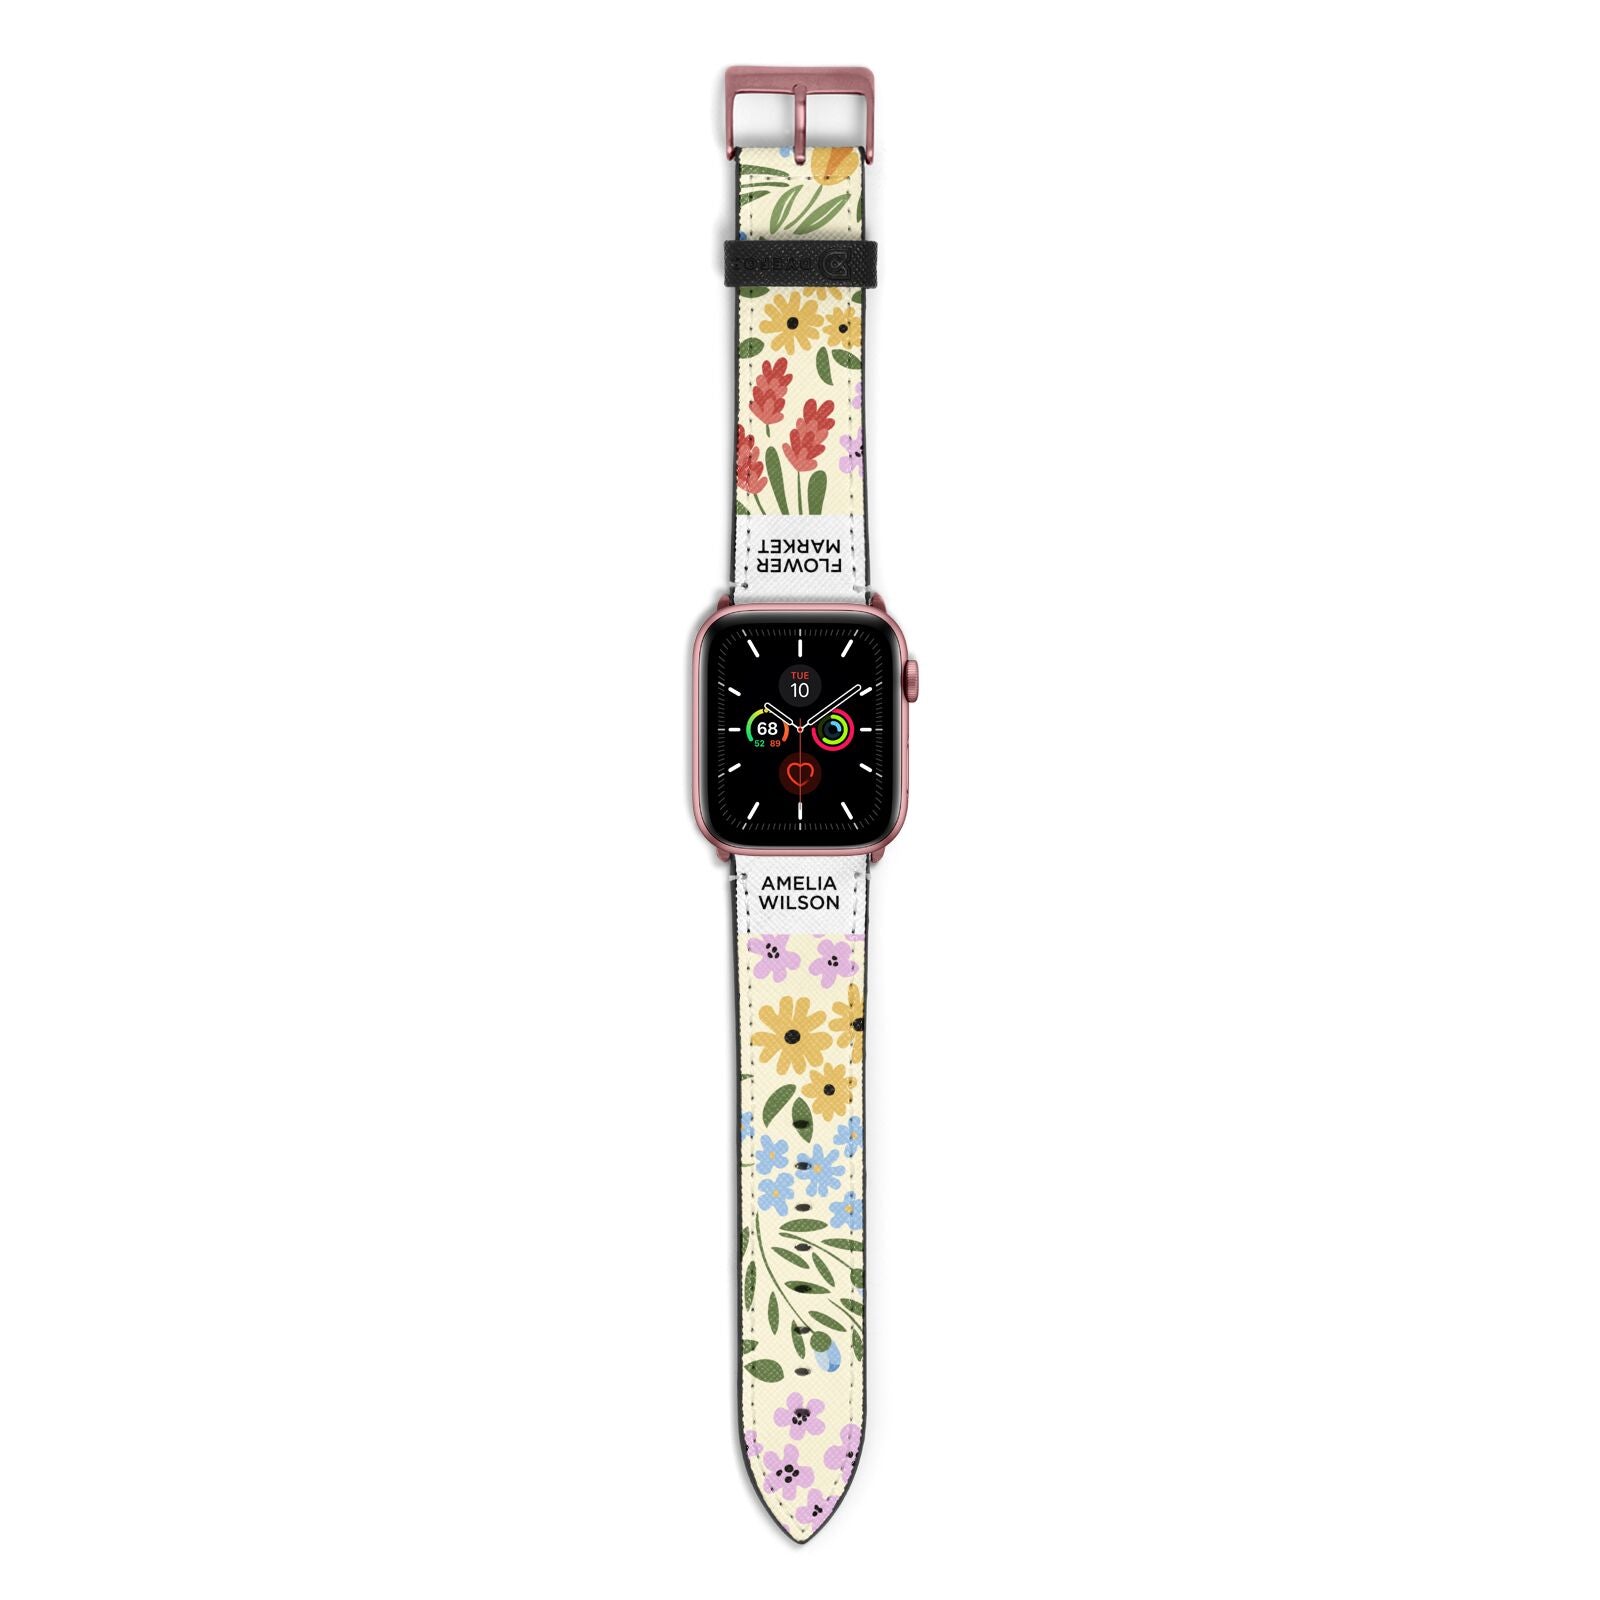 Paris Flower Market Apple Watch Strap with Rose Gold Hardware